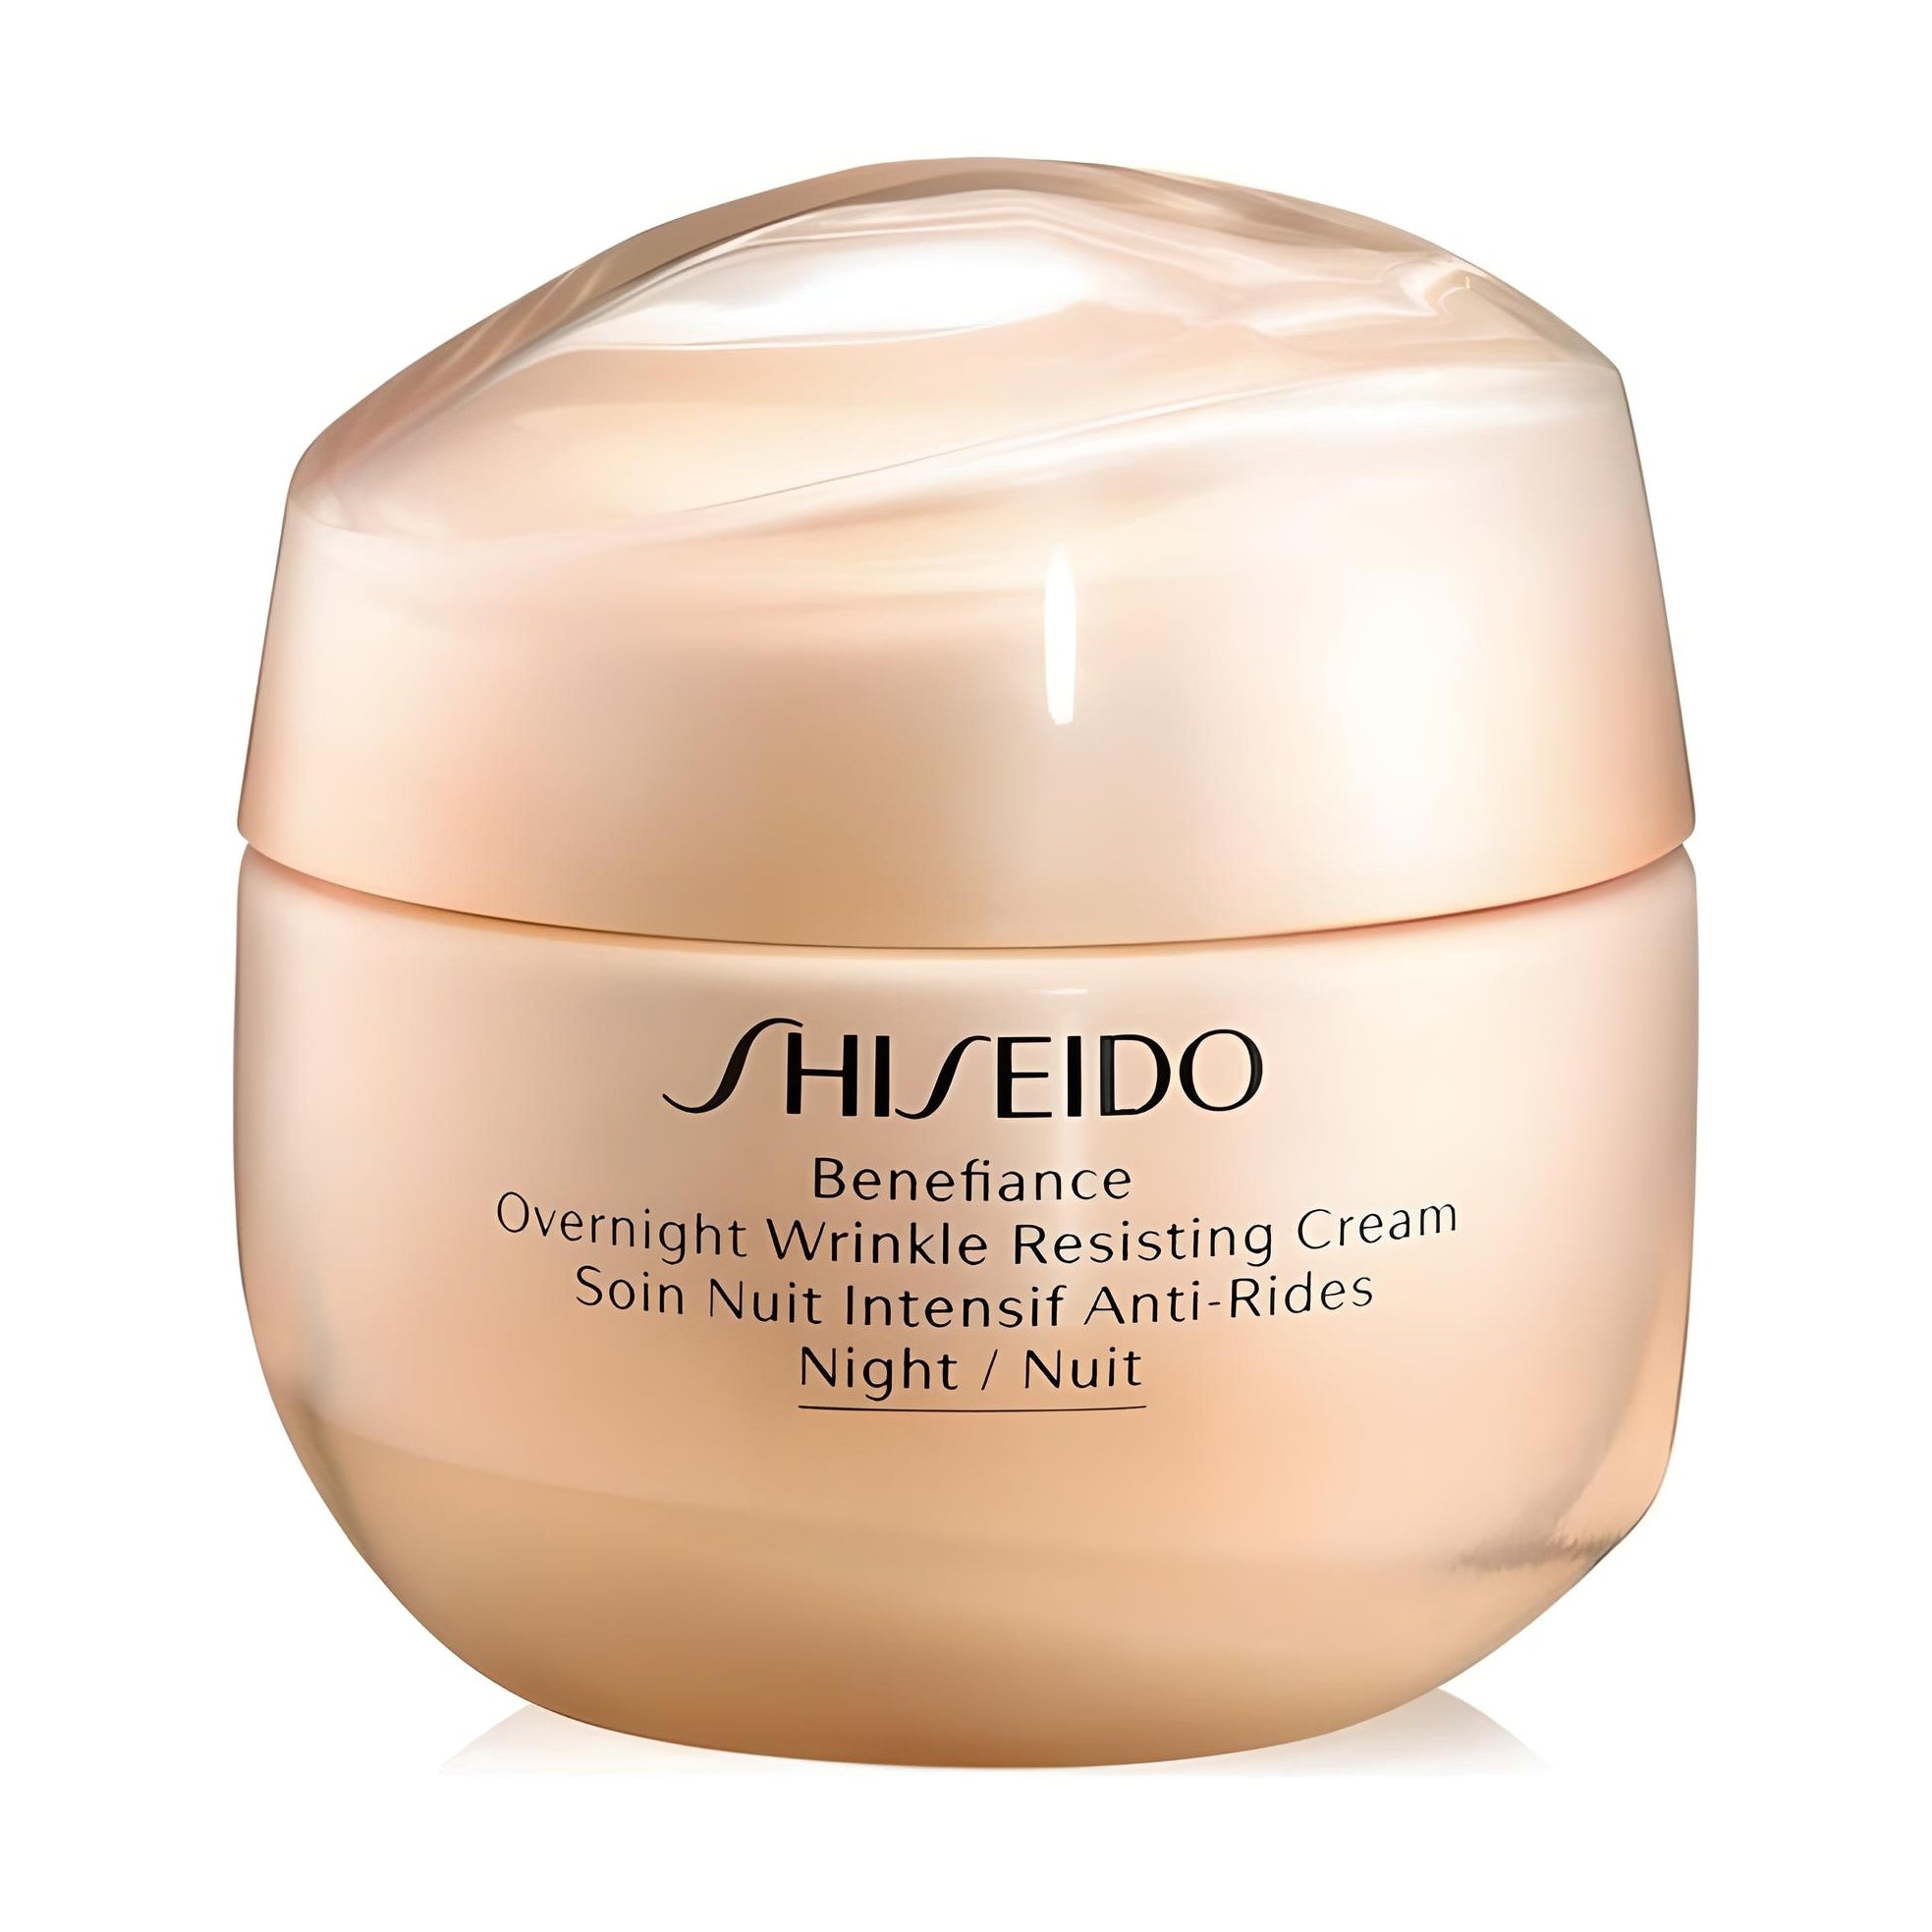 BENEFIANCE OVERNIGHT wrinkle resisting cream